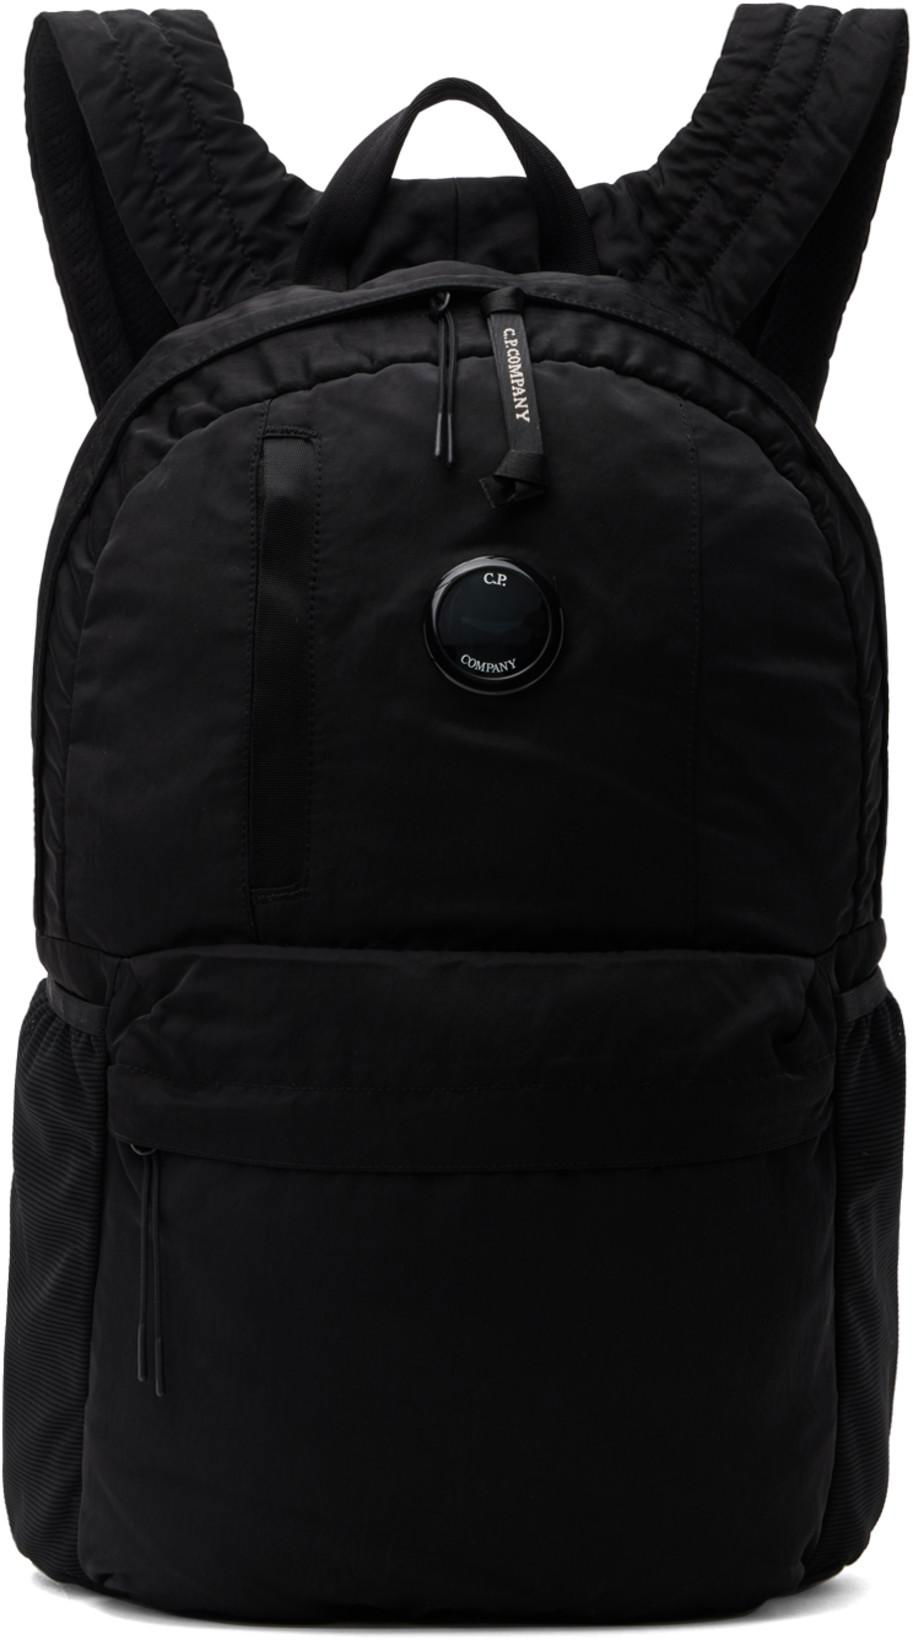 Black Nylon B Backpack by C.P. COMPANY